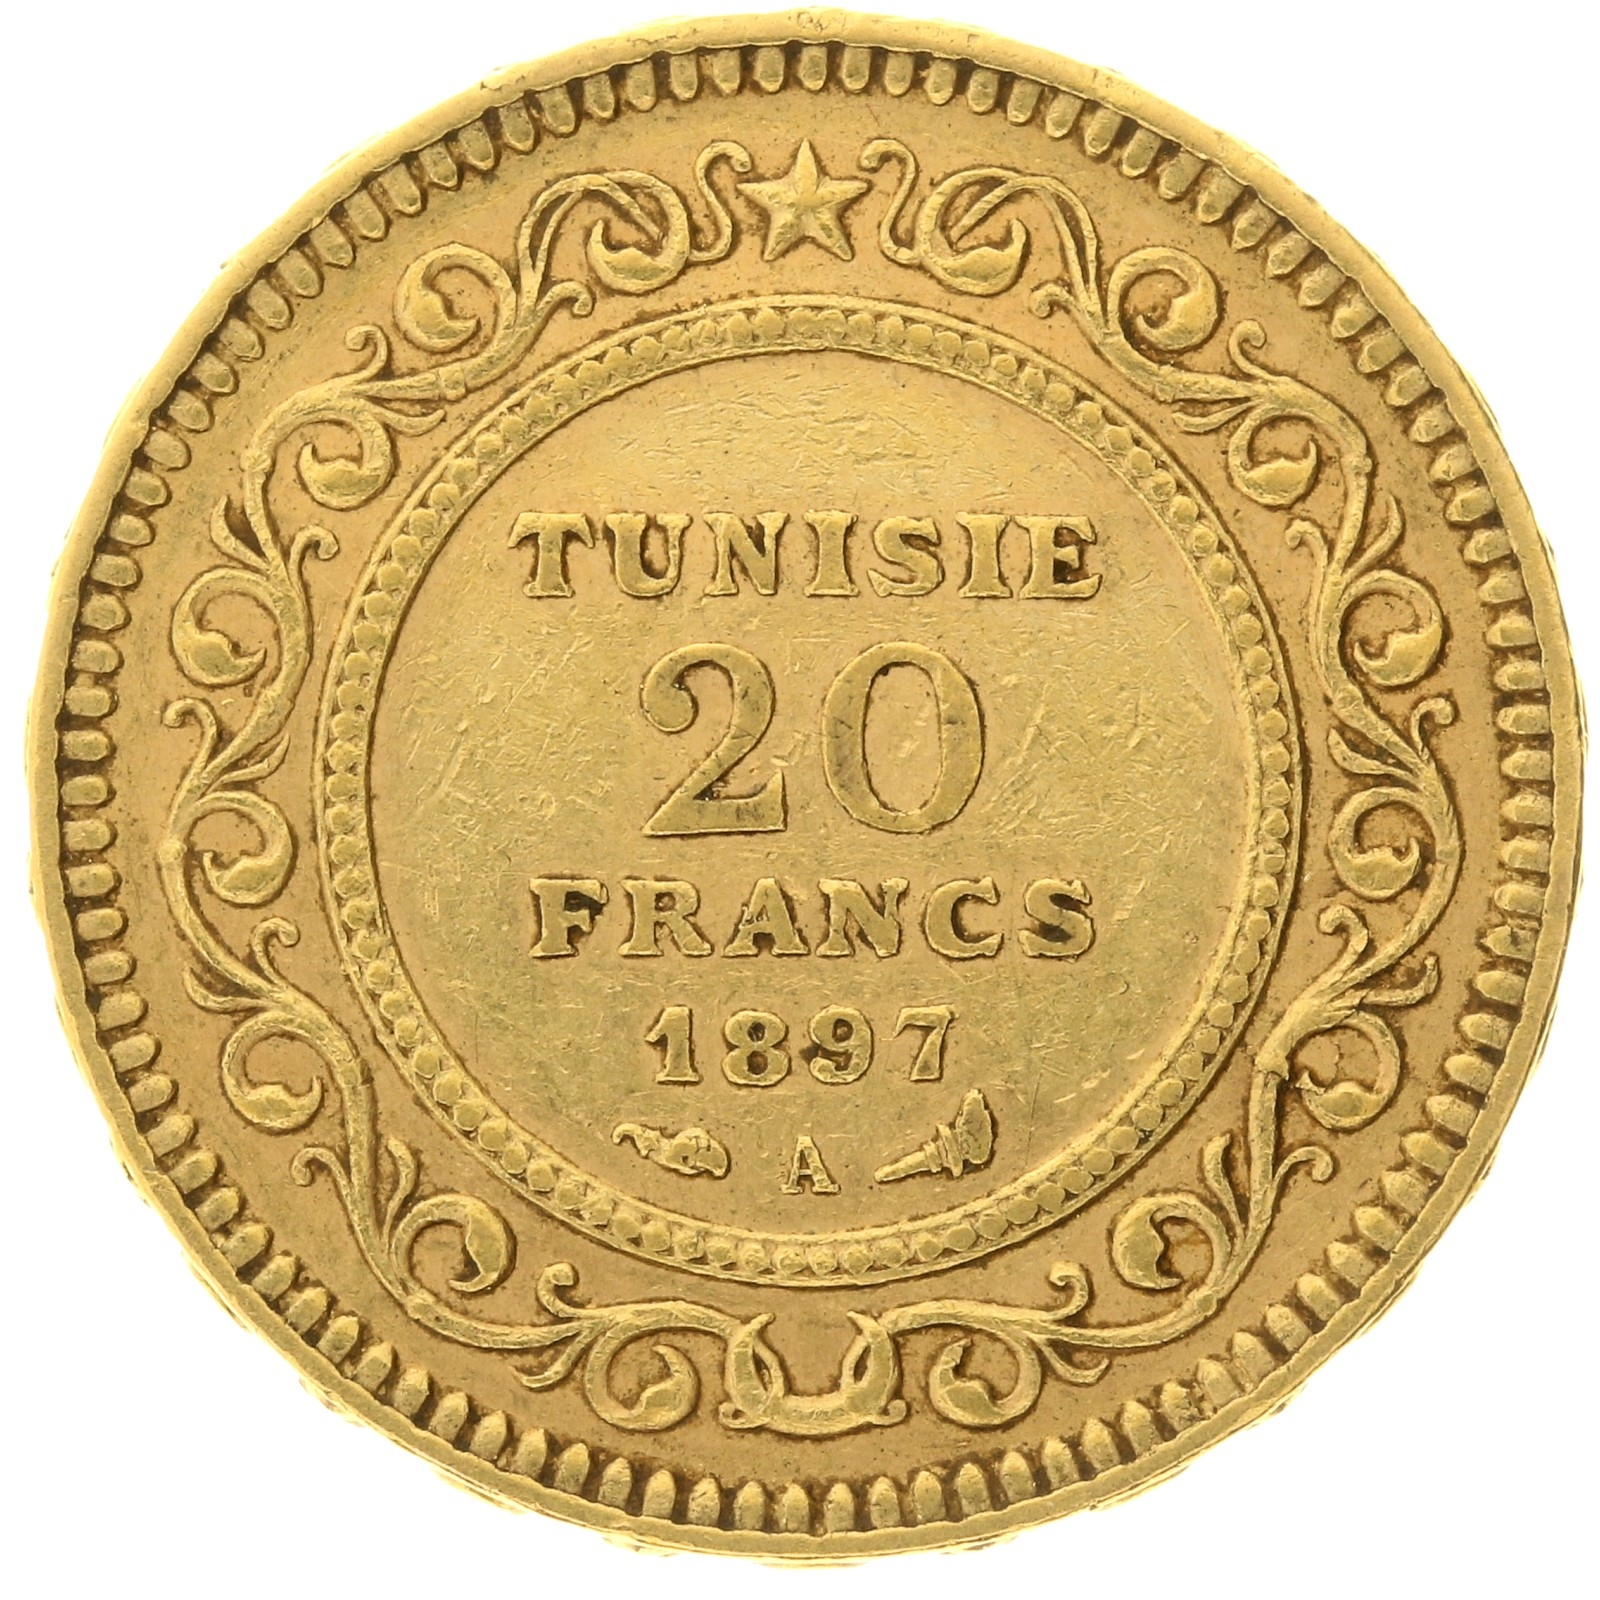 Tunisia - 20 francs - 1897 - A - Ali Bey